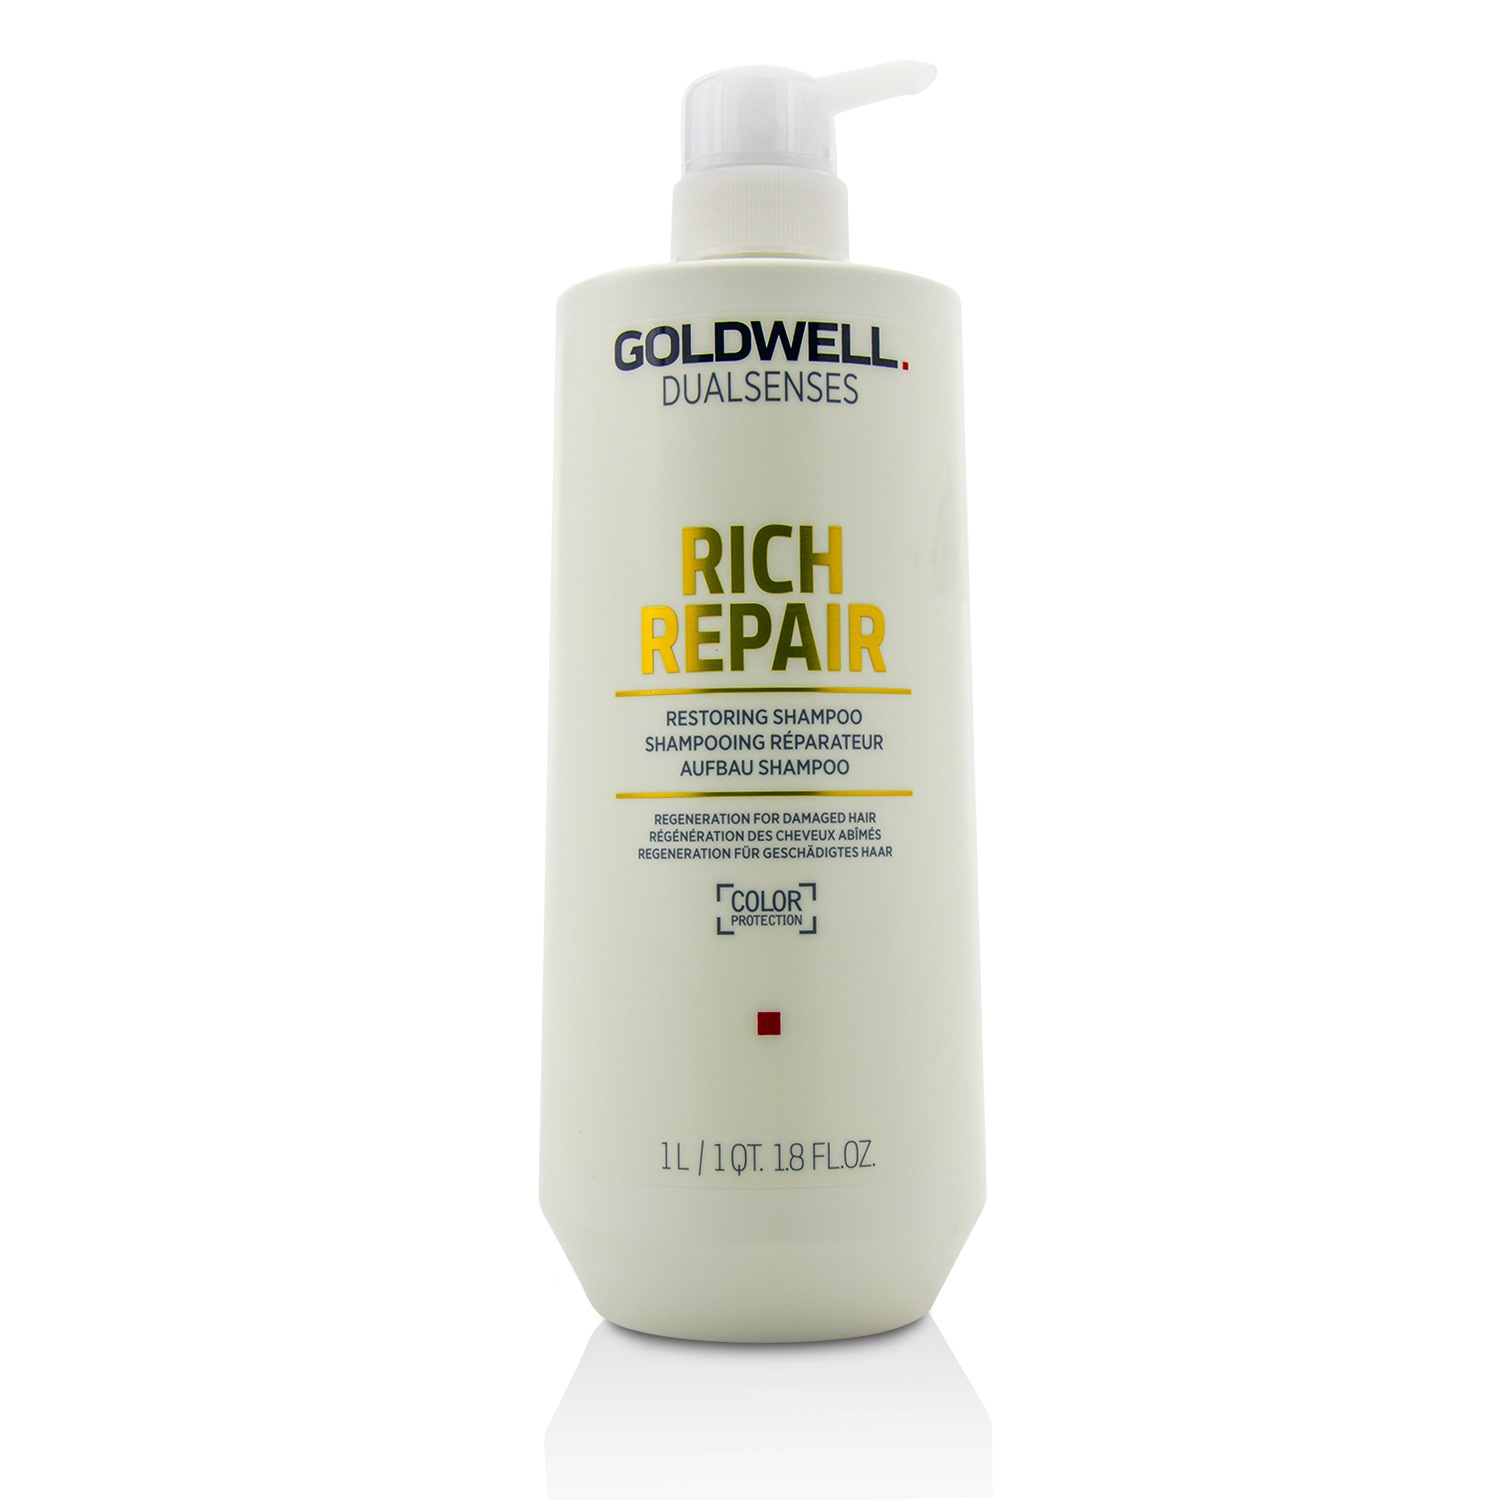 Dual Senses Rich Repair Restoring Shampoo (Regeneration For Damaged Hair) Goldwell Image